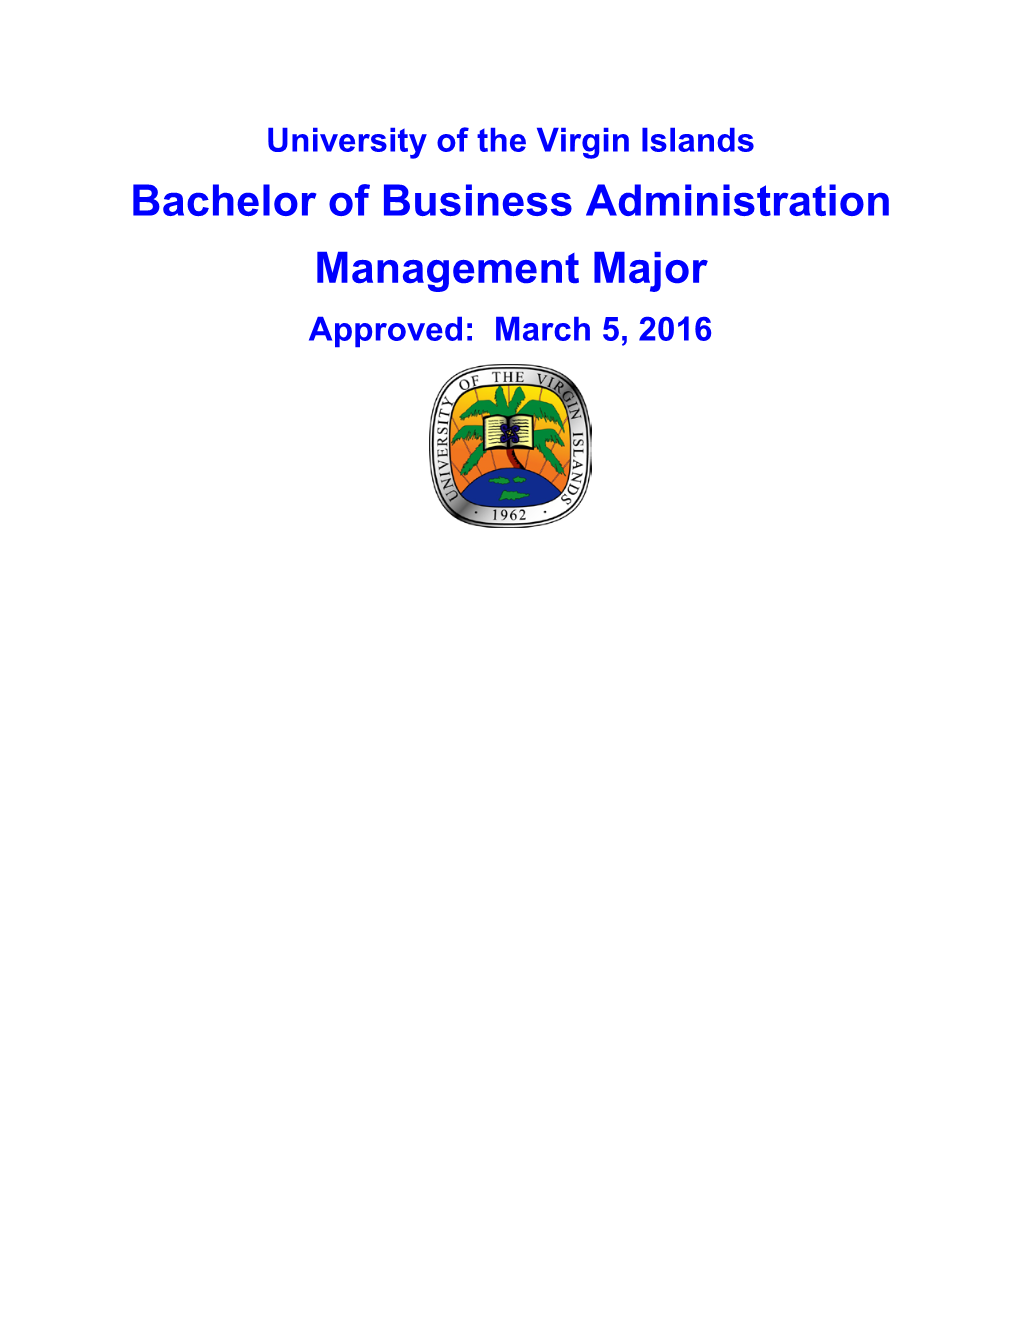 Bachelor of Business Administration Degree Program in Management